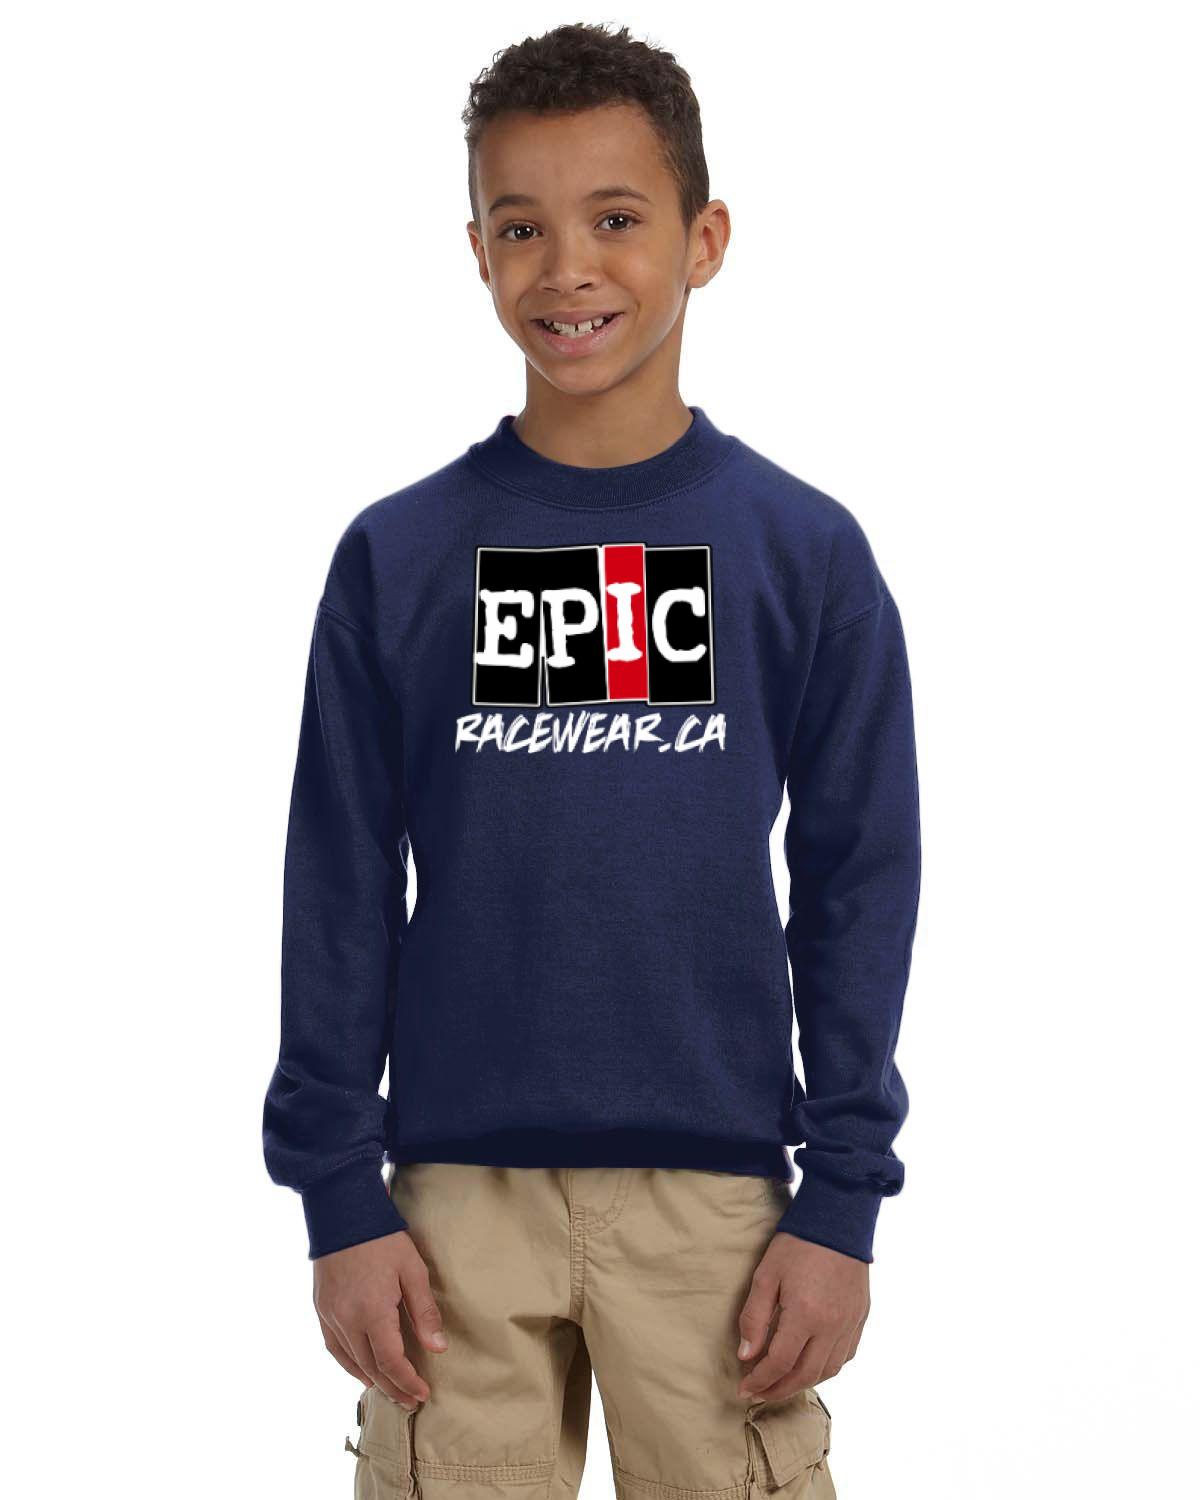 EPIC Racewear Youth Crew Neck Sweater